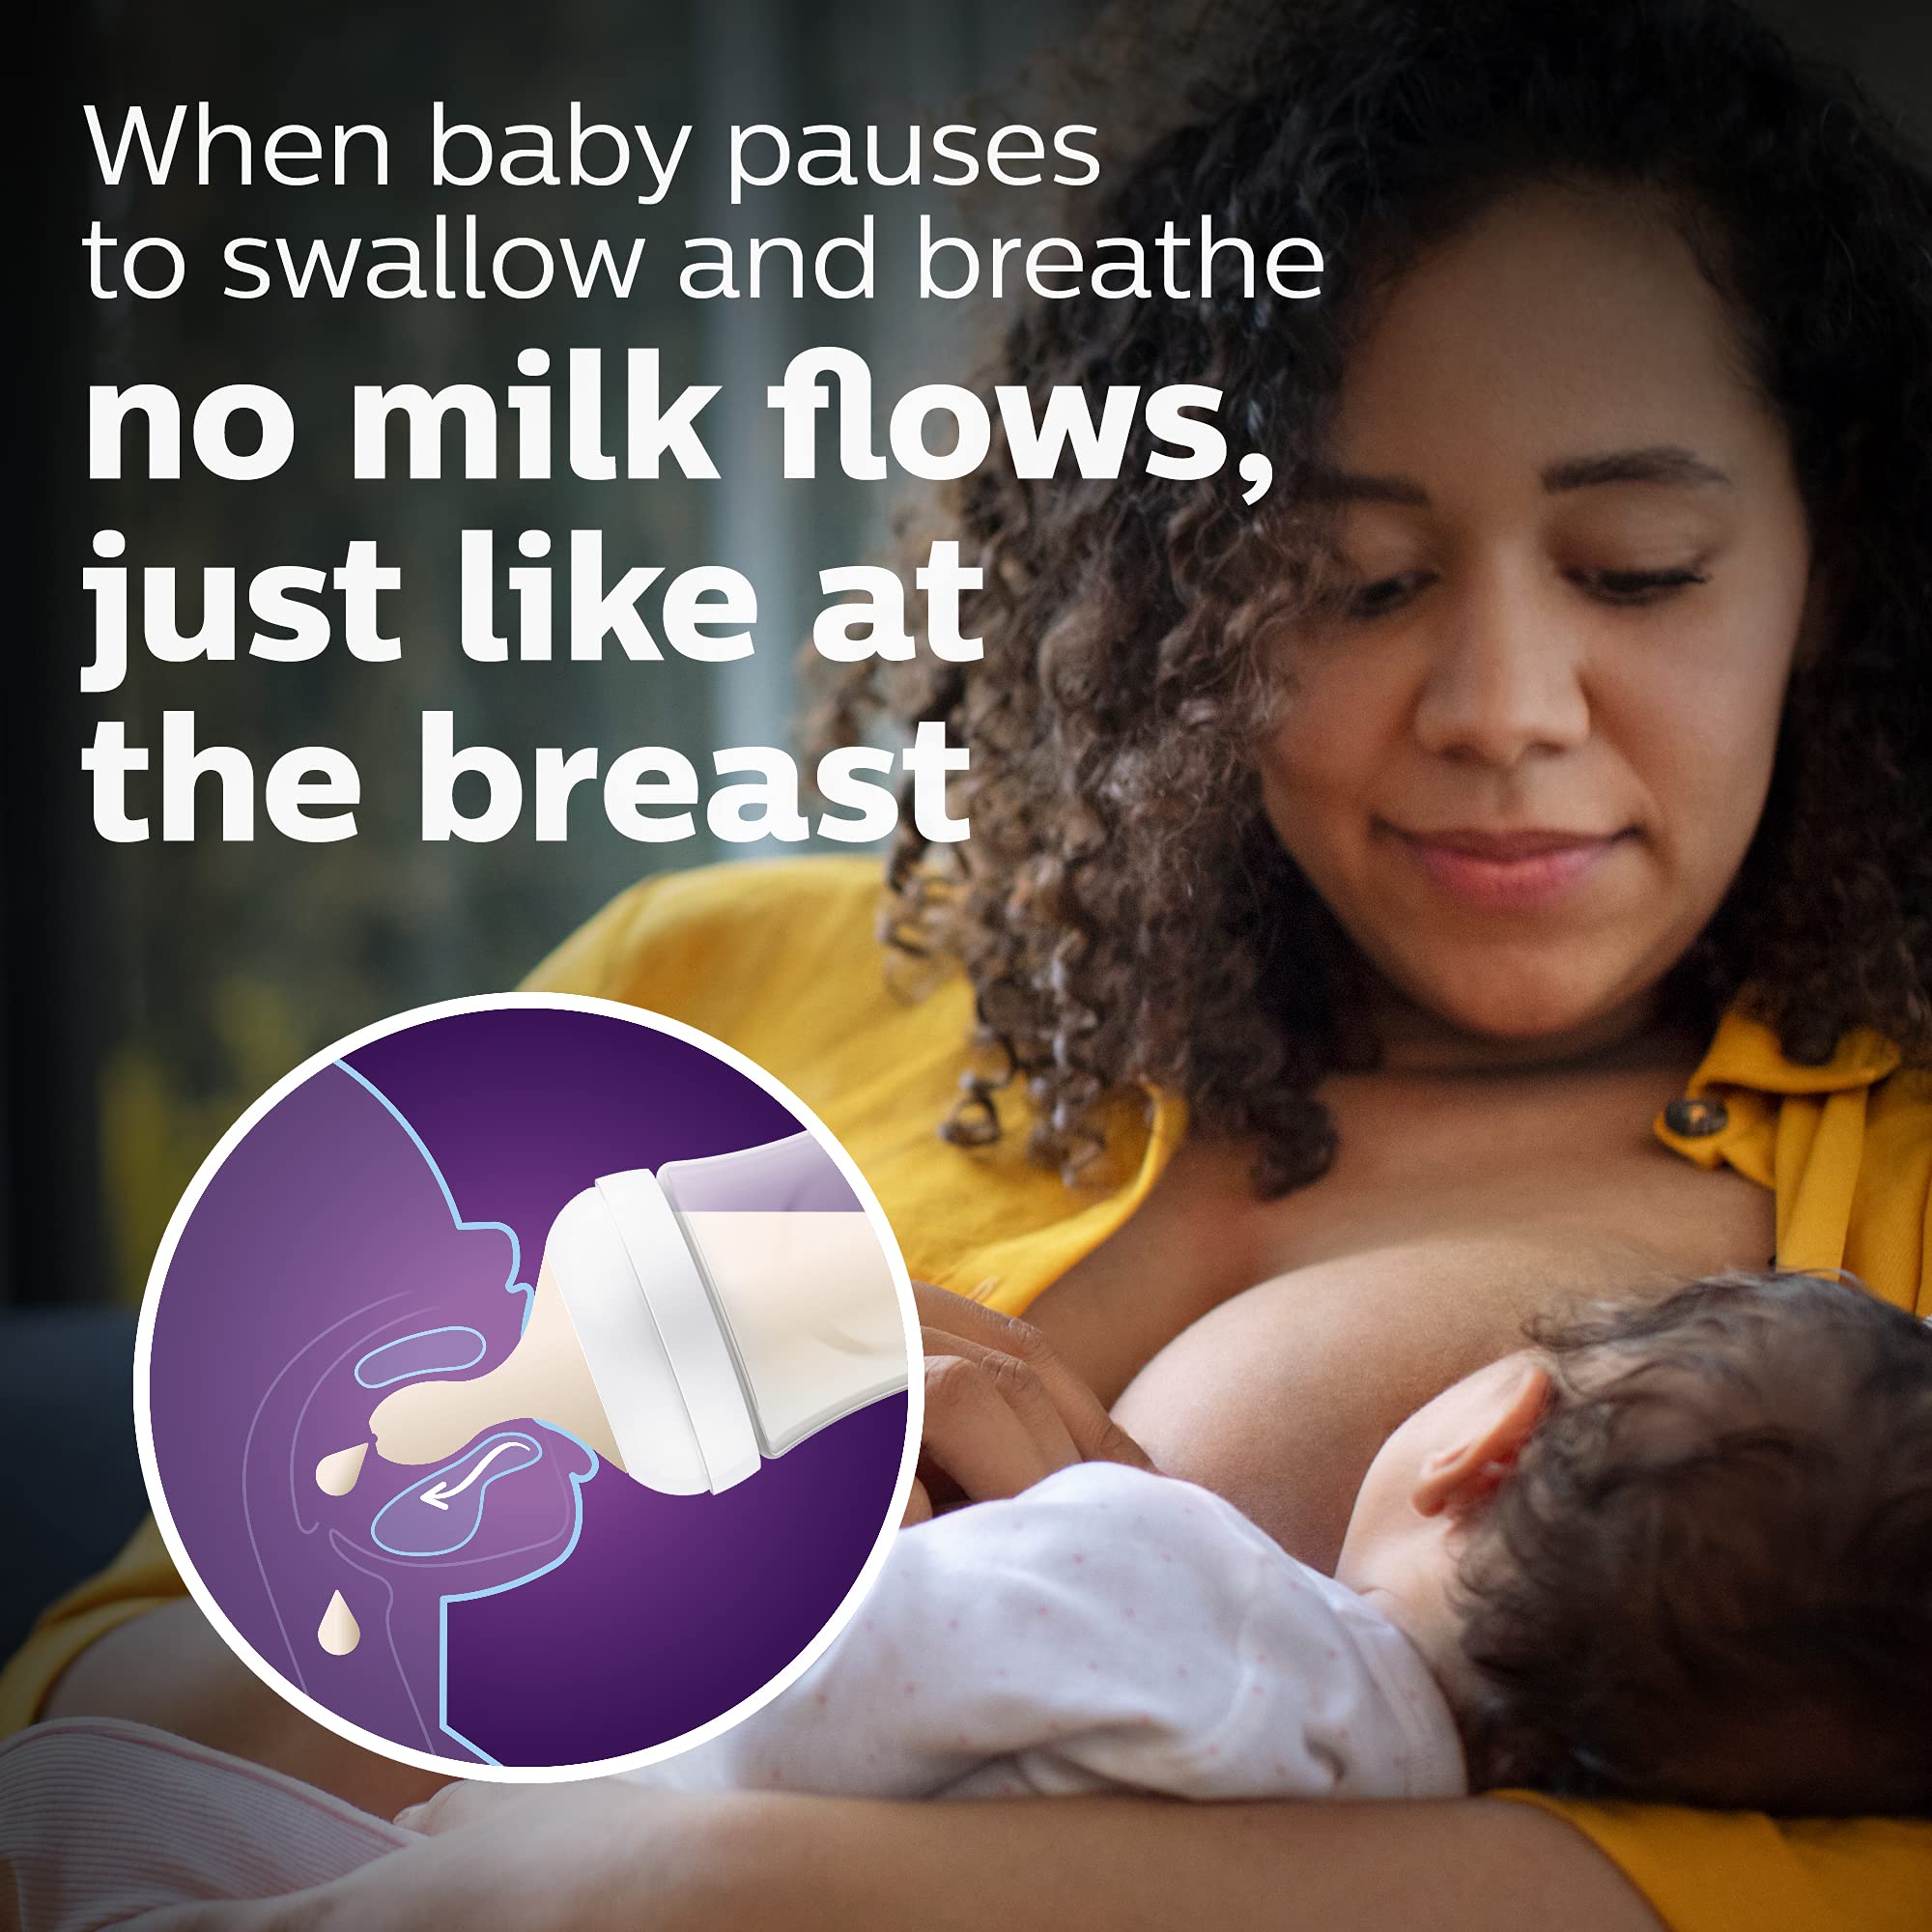 Philips AVENT Natural Baby Bottle with Natural Response Nipple, Purple, 9oz, 4pk, SCY903/34